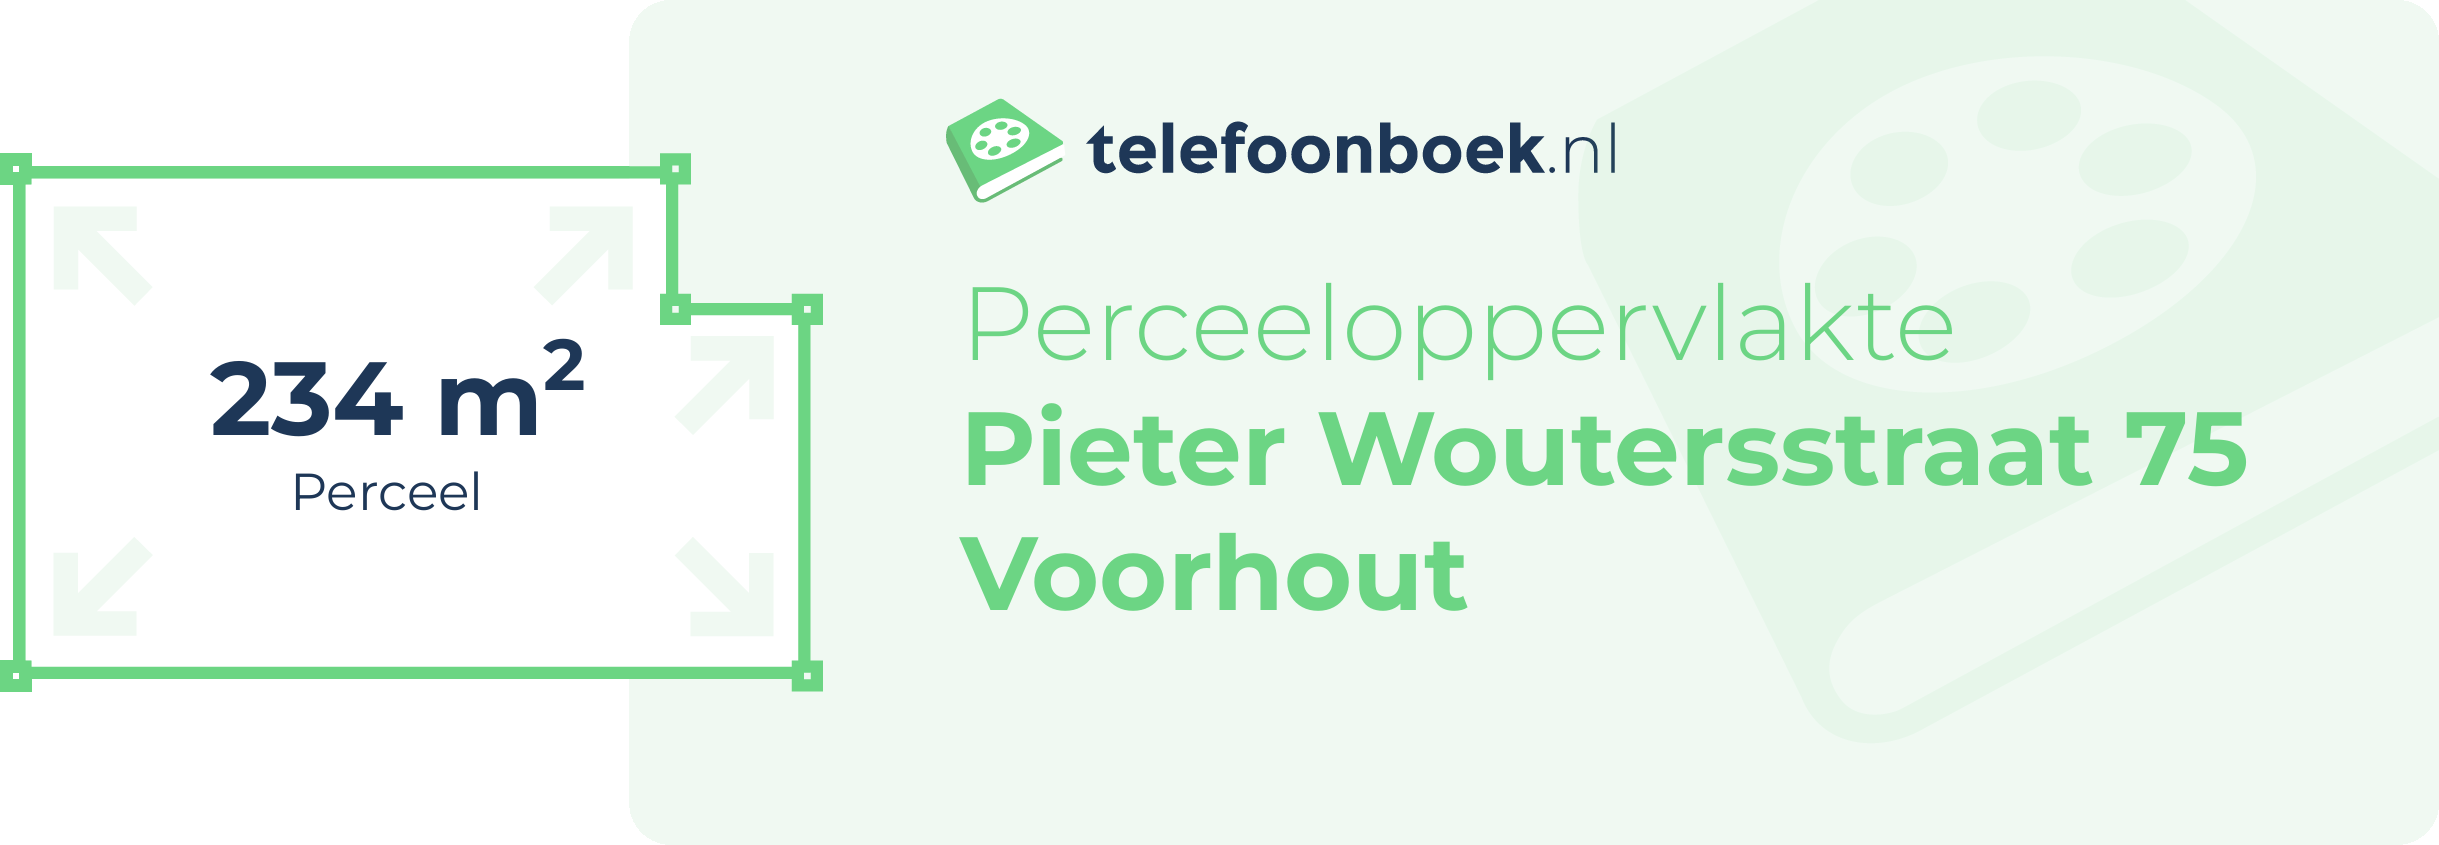 Perceeloppervlakte Pieter Woutersstraat 75 Voorhout